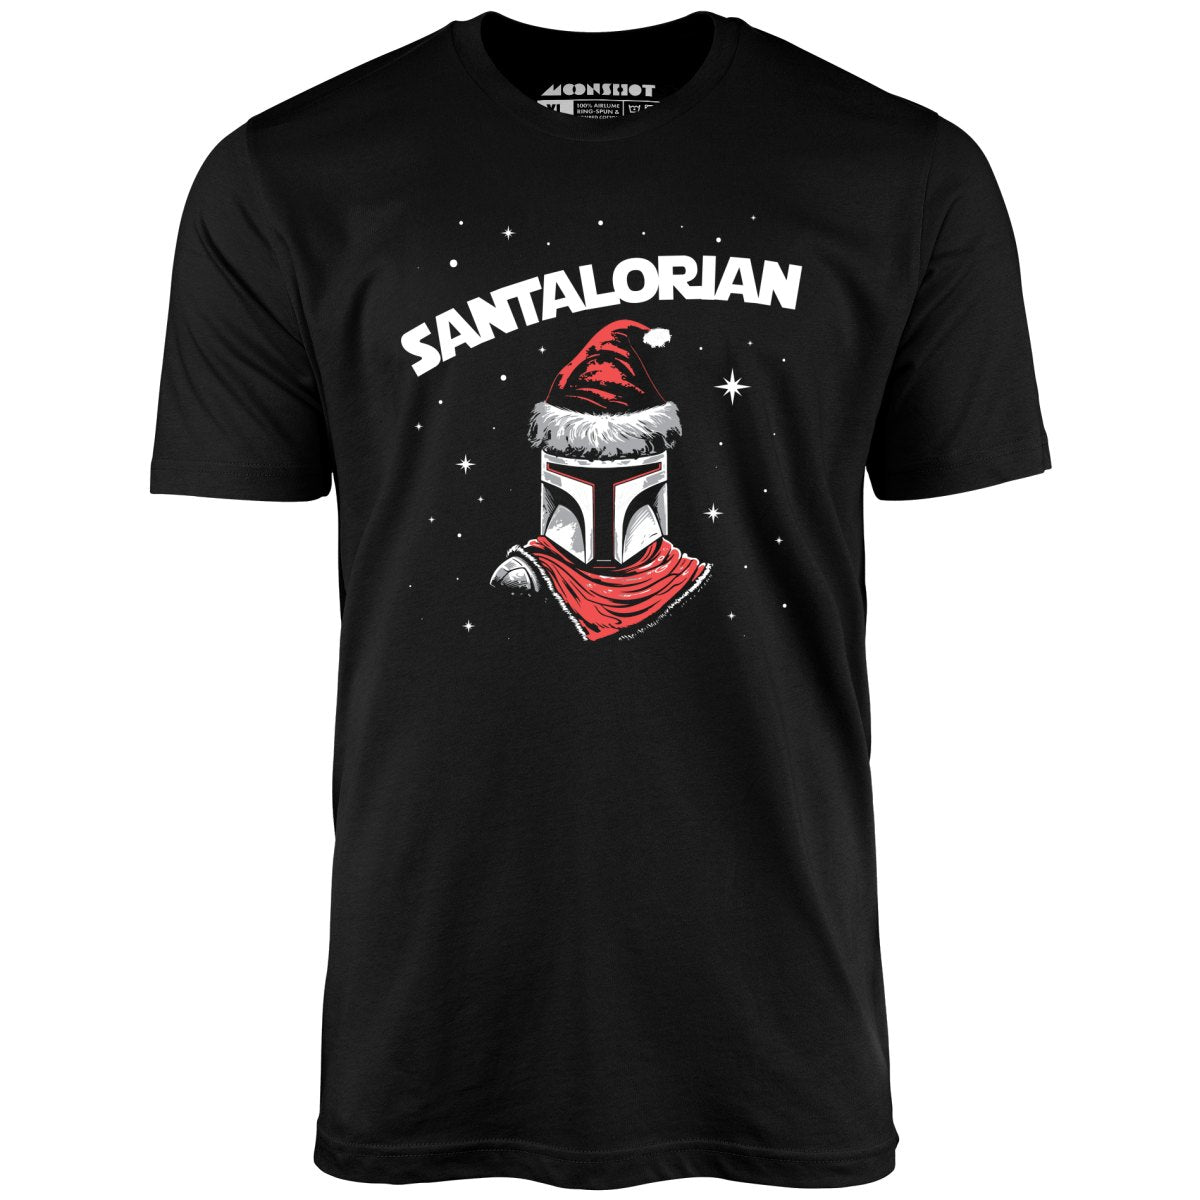 Santalorian - Unisex T-Shirt